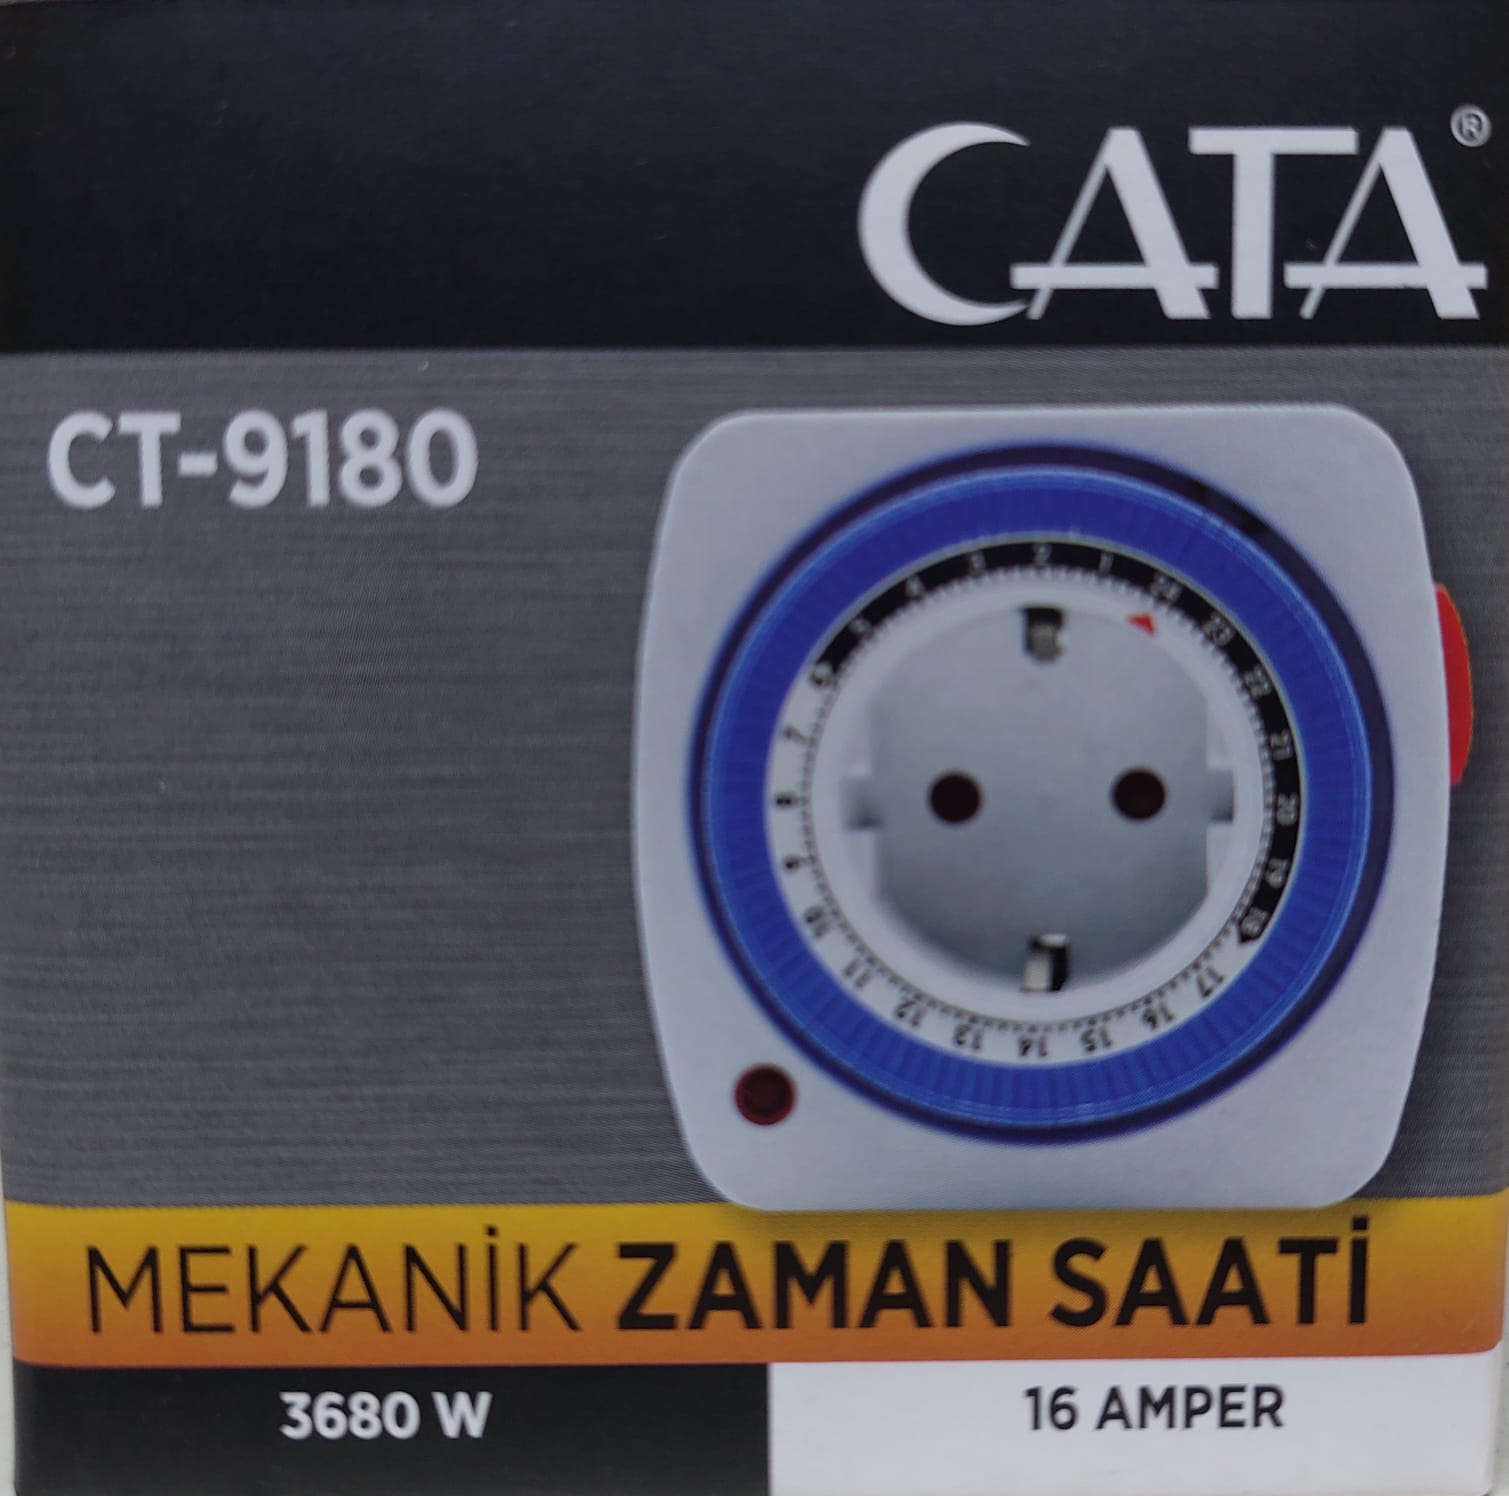 Cata Ct-9180 Zaman Ayarlı Priz Mekanik Ayarlanabilir Timer Saati